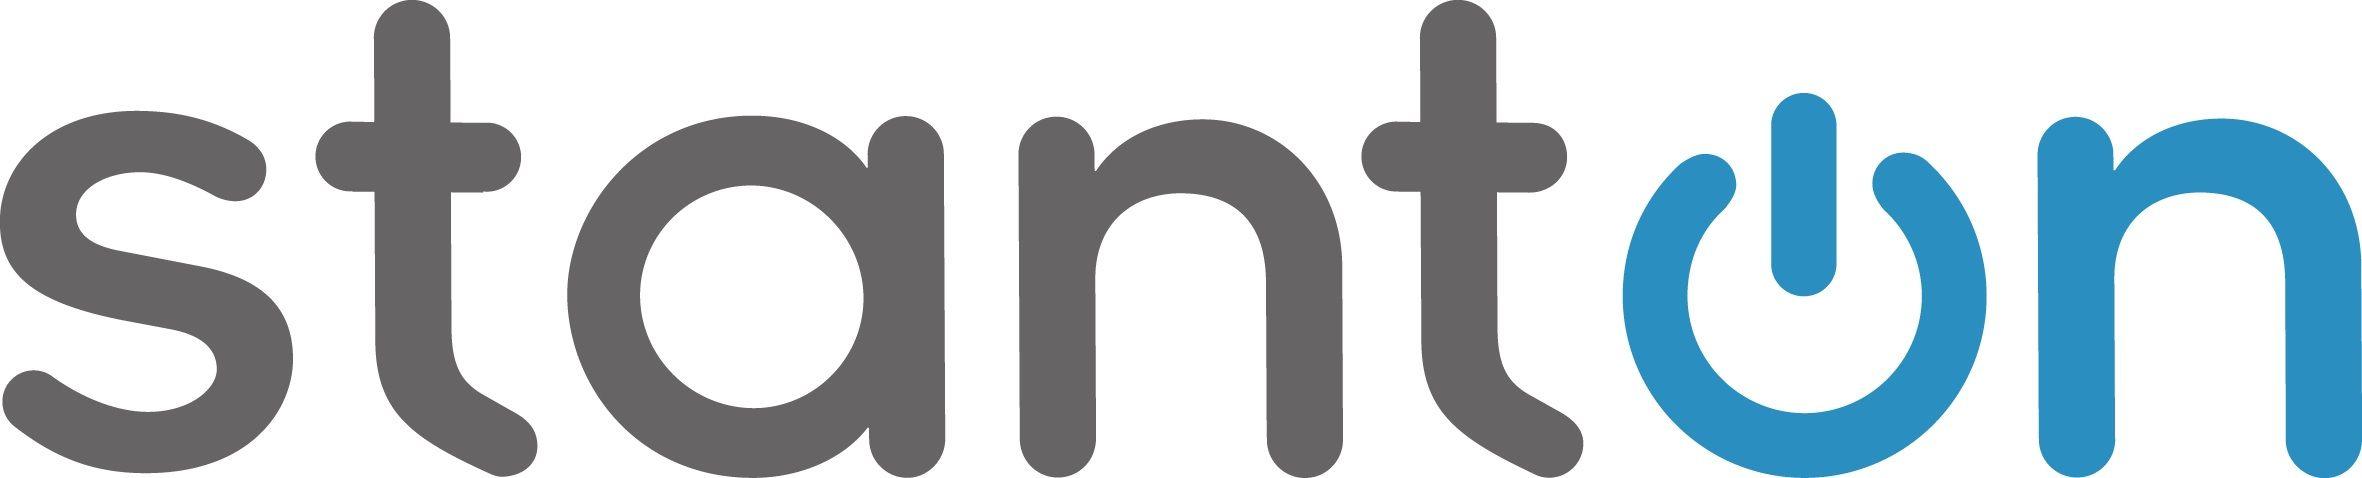 Stanton Logo - Stanton | My logo life | Logos, Bad logos, Nintendo wii